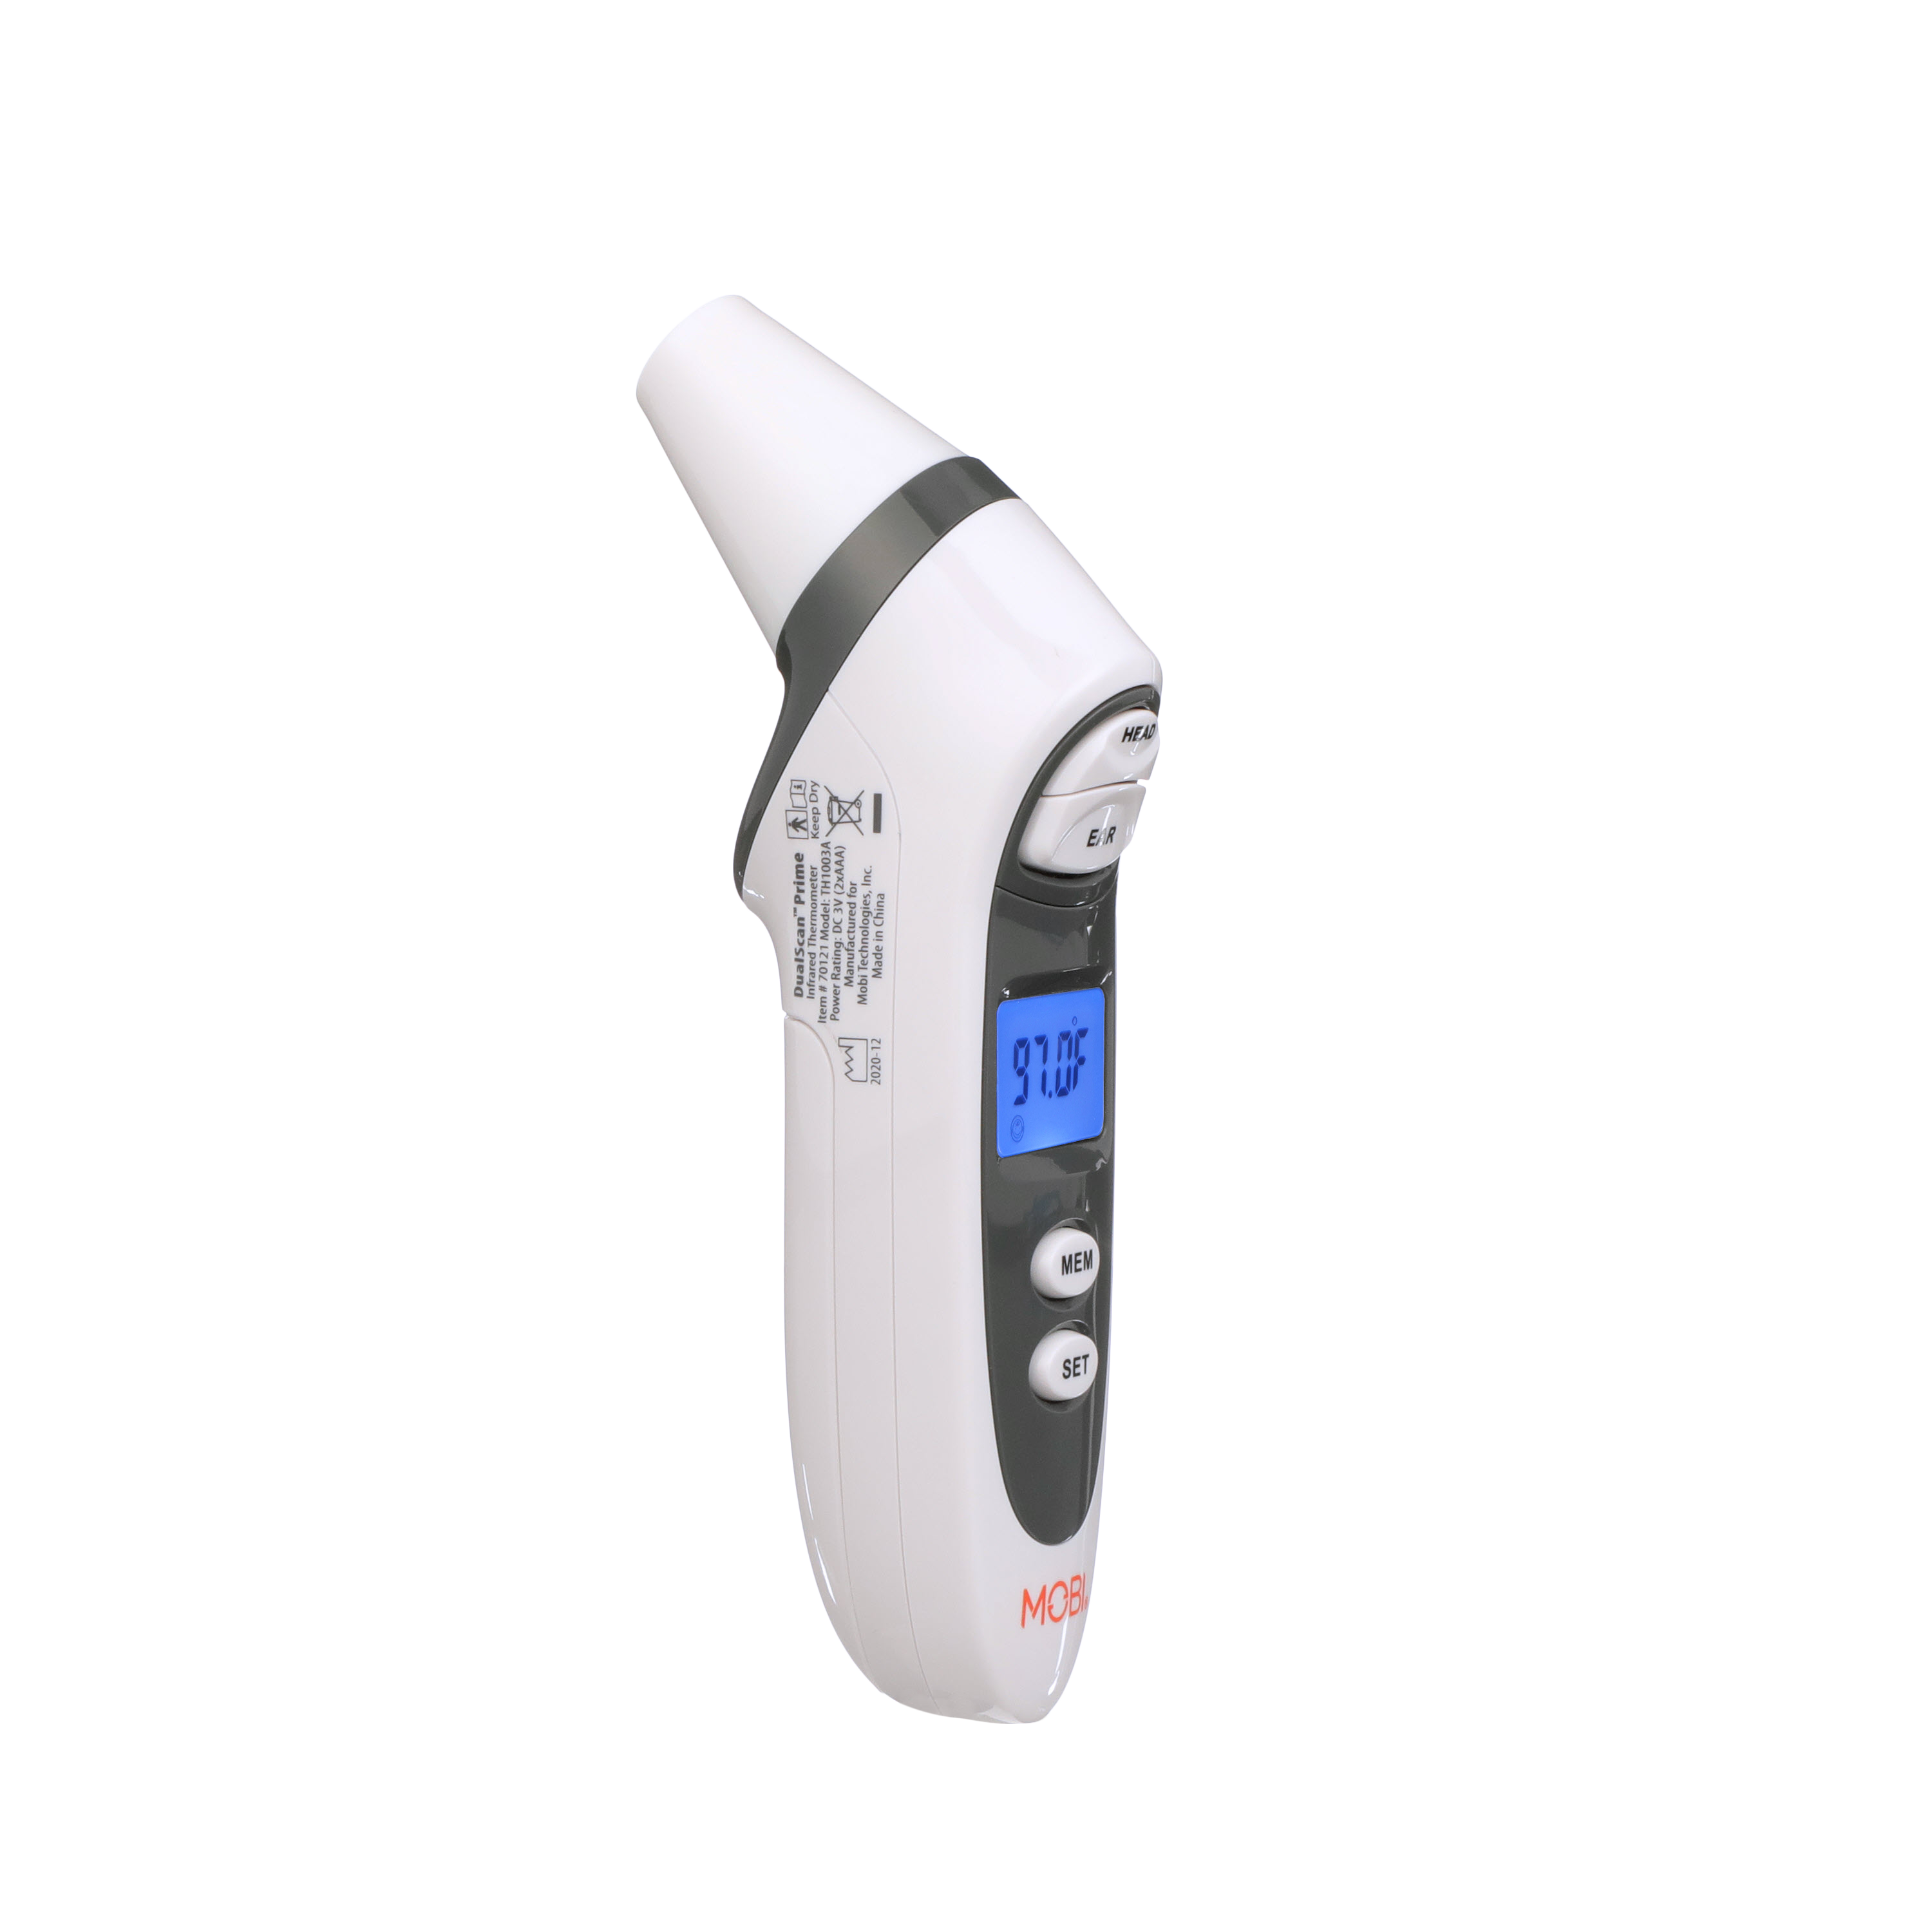 Digital Dual Thermometer, TEMP200